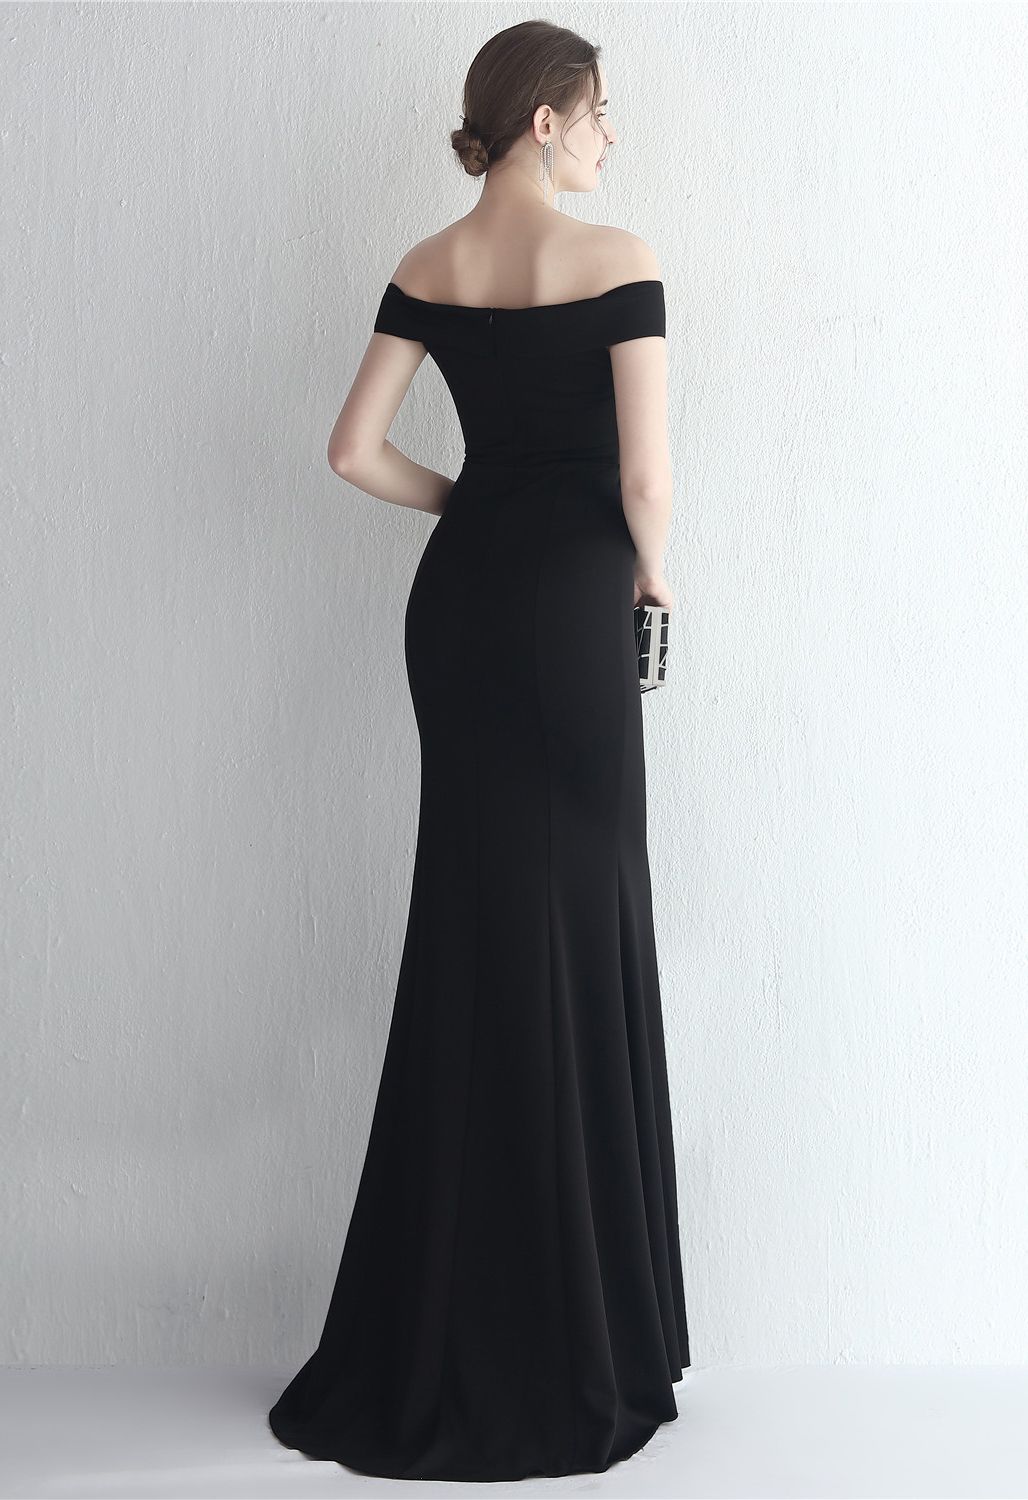 Twist Front Off-Shoulder Gown in Black